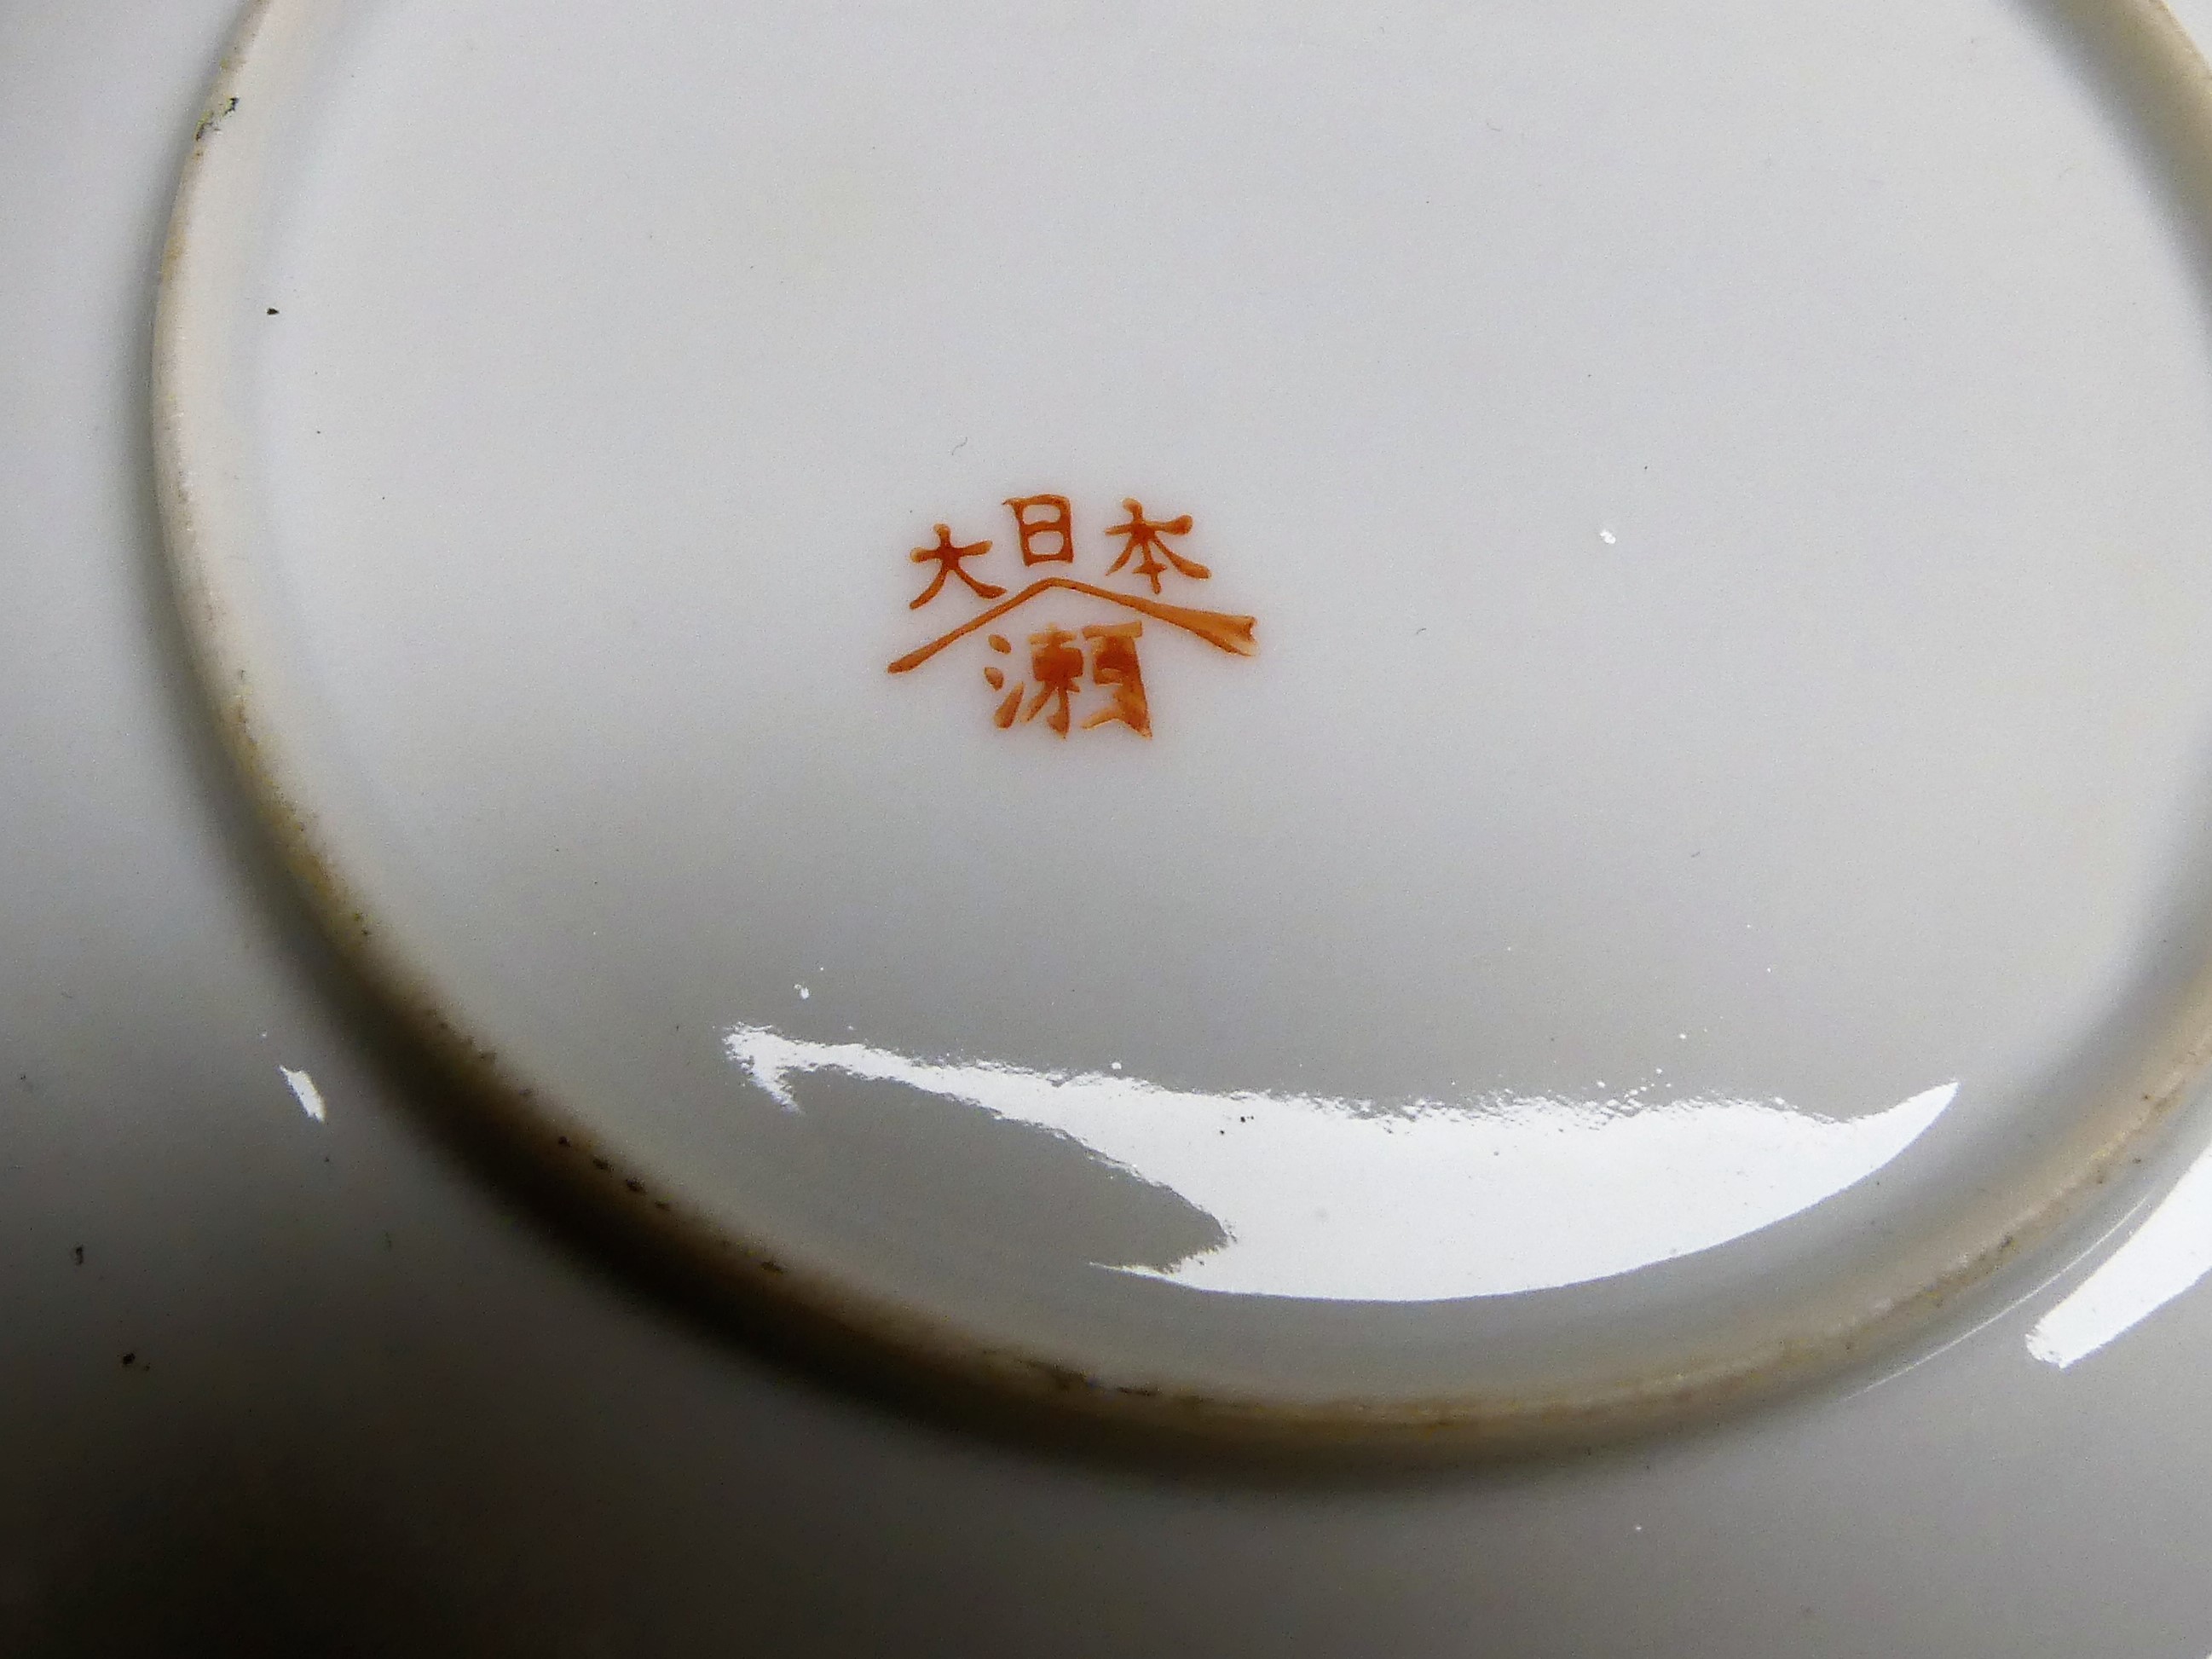 Suzuki Geishaware Japans theeservies van fijn porselein 